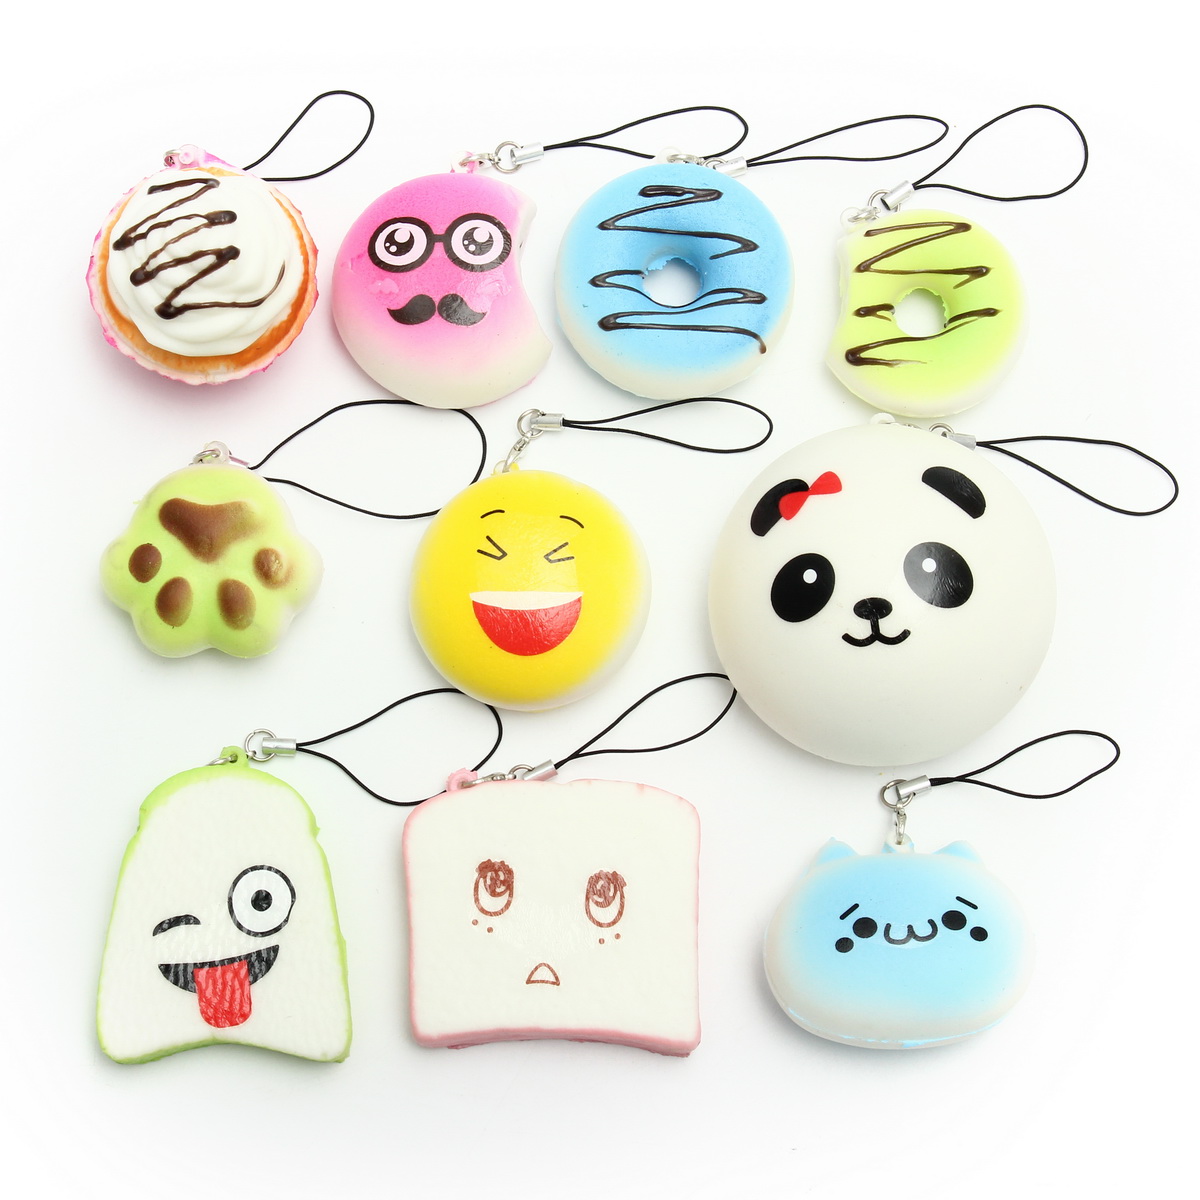 Banggood-Kawaii-10Pcs-Exquisite-Squishy-Random-Charm-Soft-PandaBreadCakeBuns-Phone-Straps-Toys-Decor-1158164